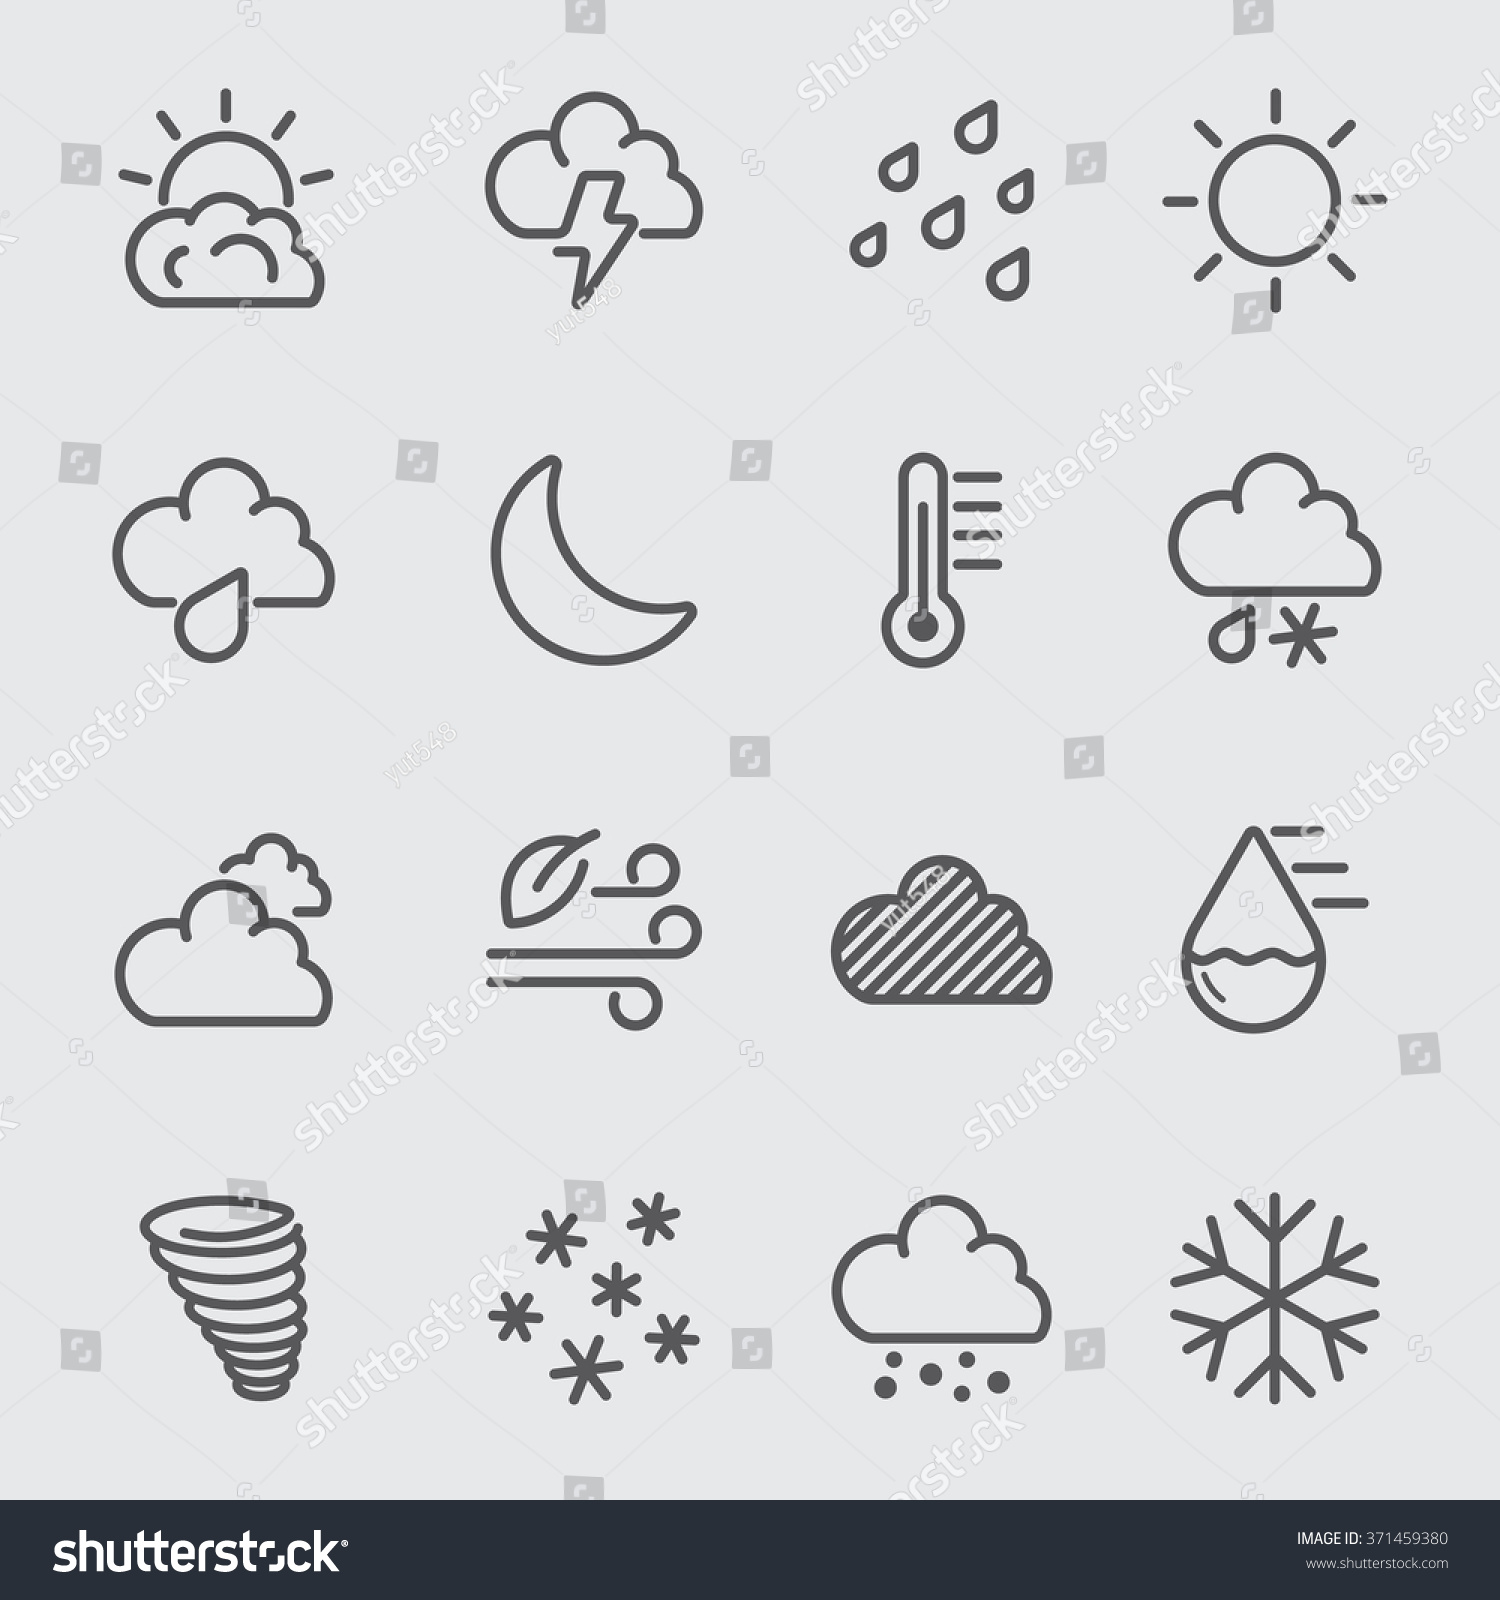 Weather line icon #371459380